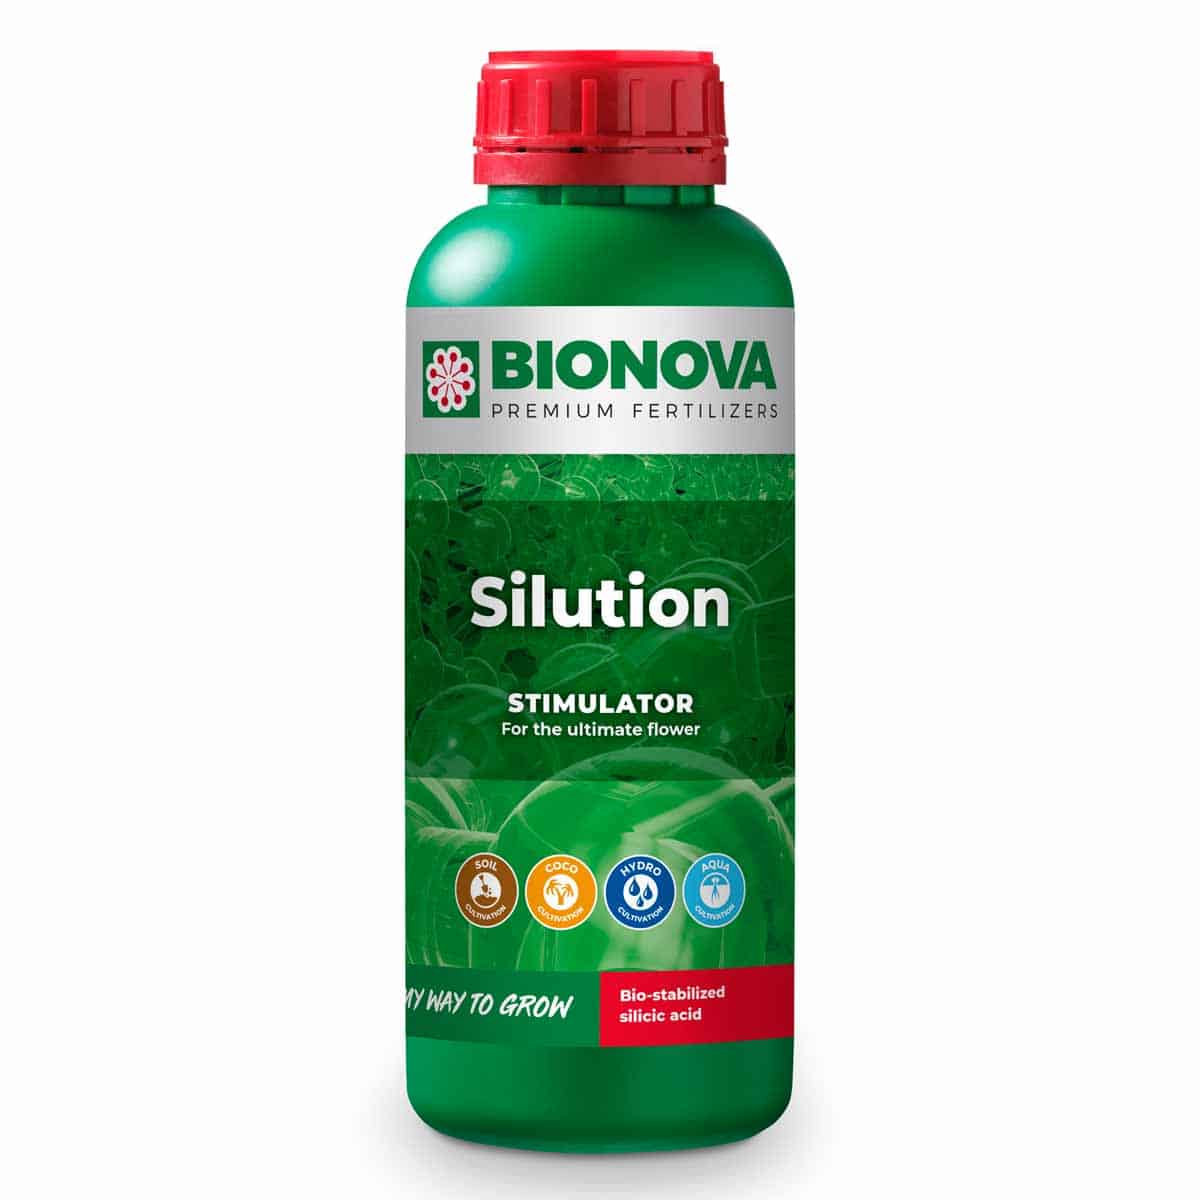 Bio Nova Silution Product Photo Potassium Silicate - silicic acid